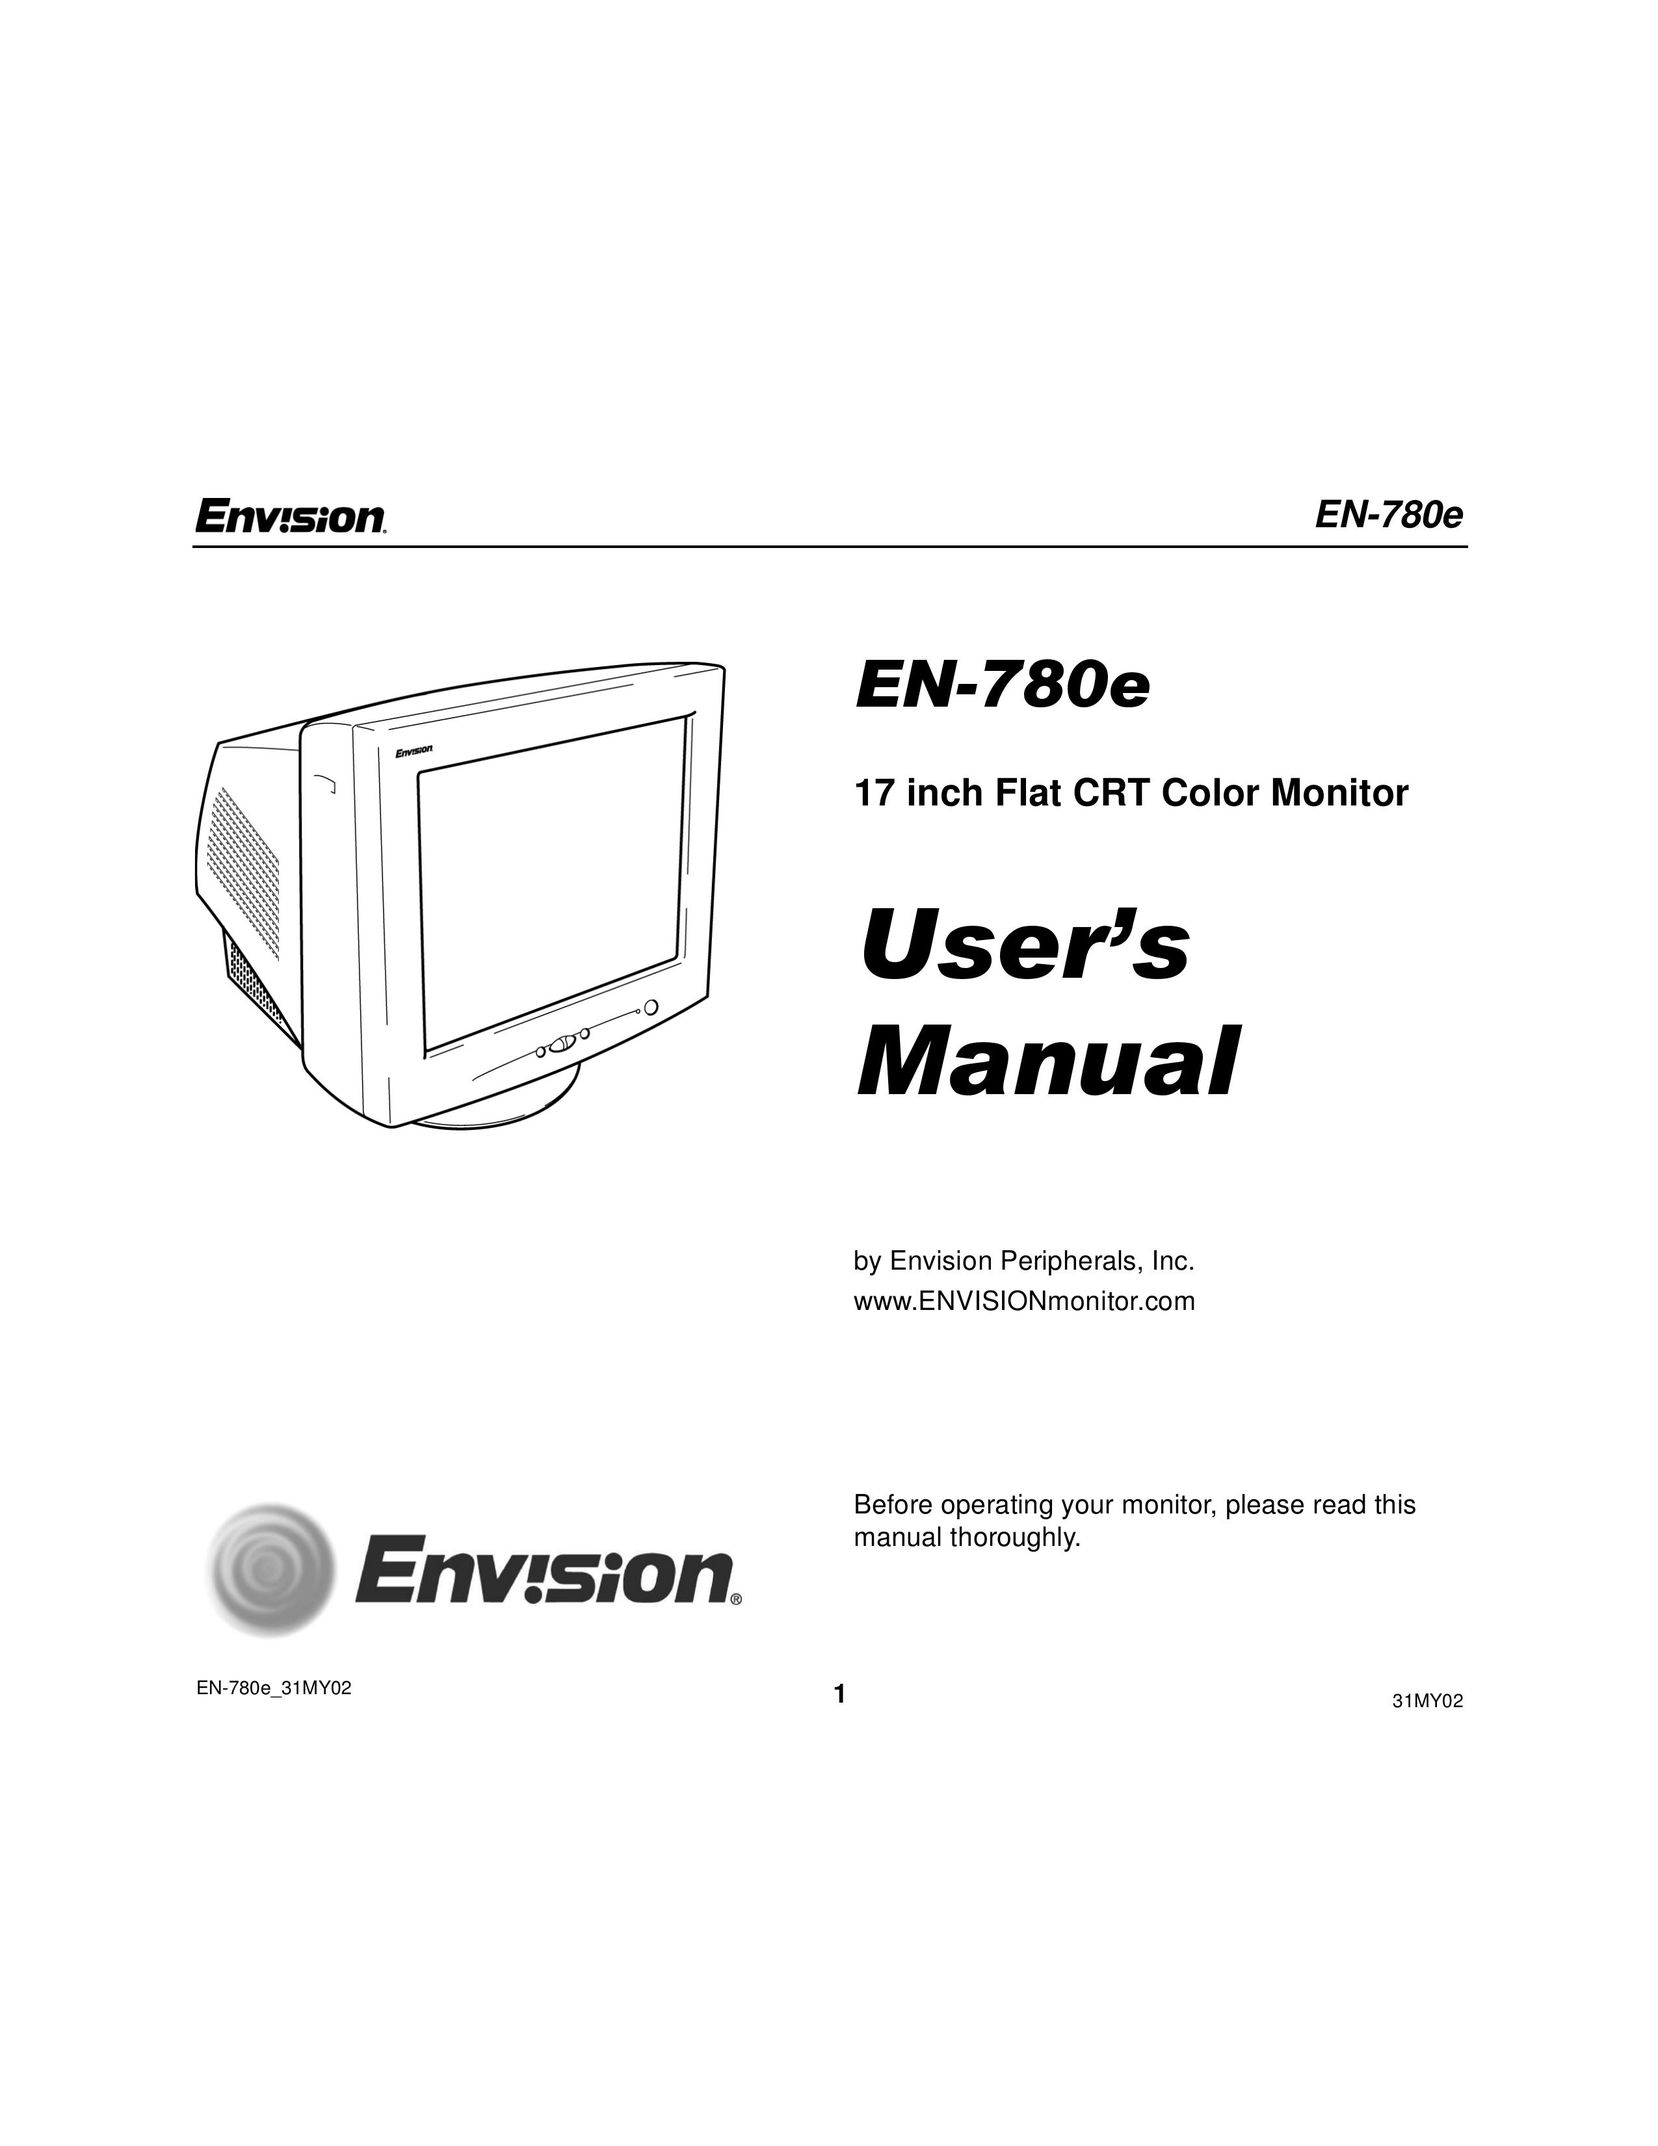 Envision Peripherals EN-780e_31MY02 Computer Monitor User Manual